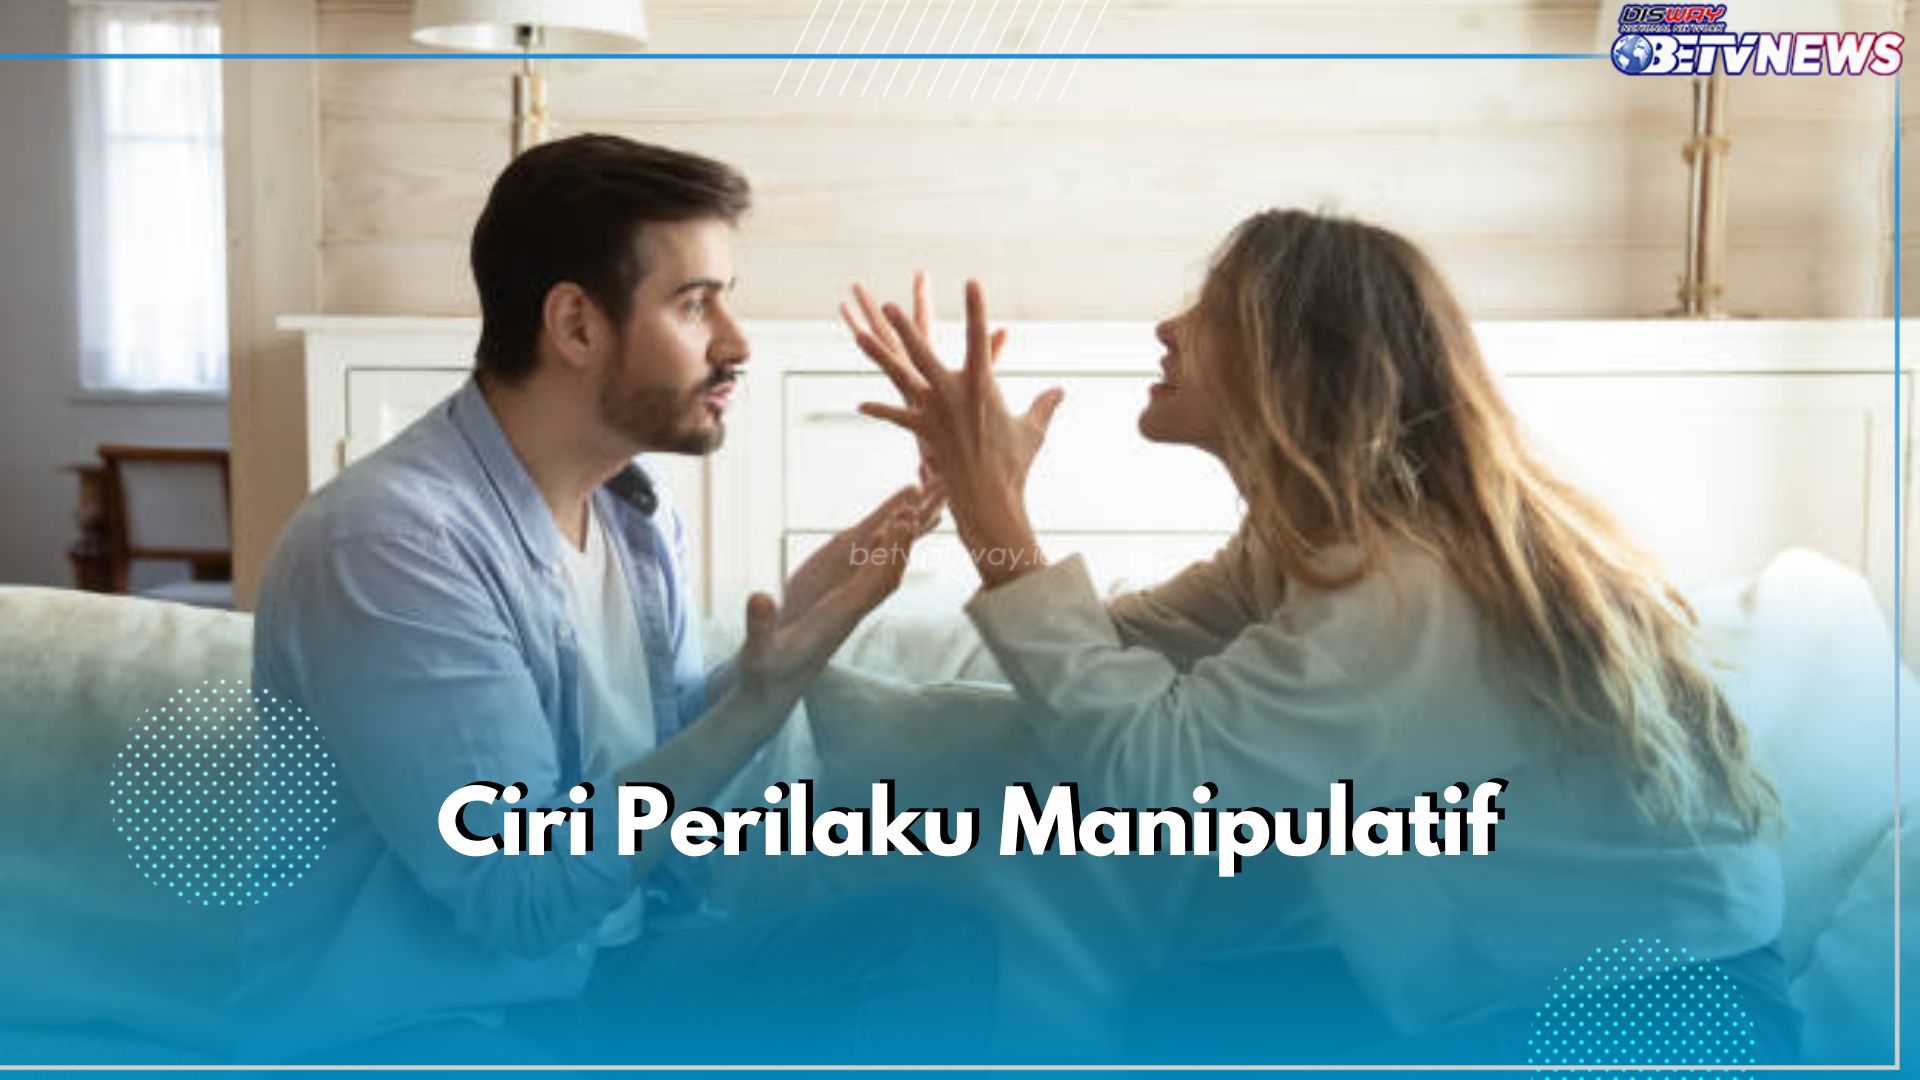 7 Ciri Perilaku Manipulatif yang Perlu Diwaspadai, Nomor 5 Paling Sering Dilakukan 